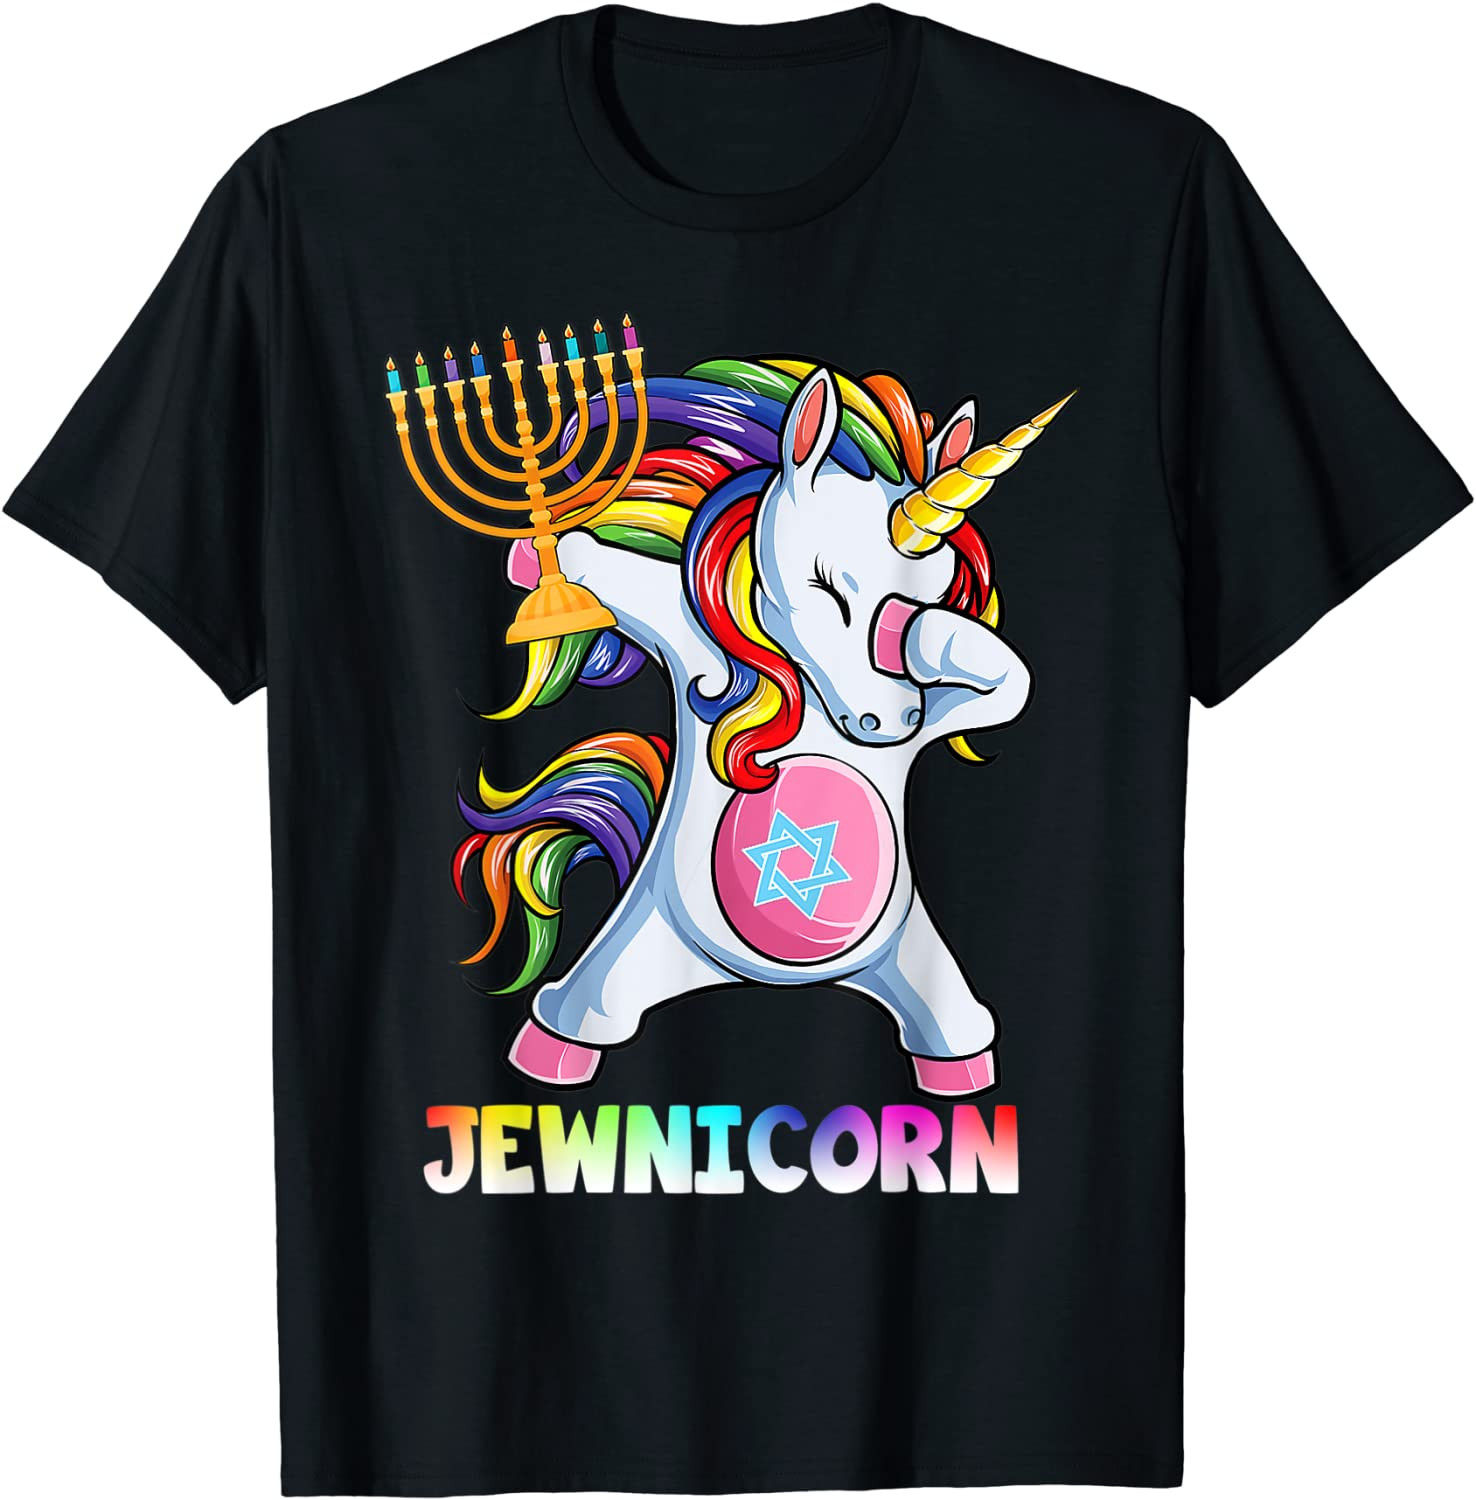 Hanukkah Dabbing Unicorn Jewnicorn Chanukah Jewish Xmas T-Shirt